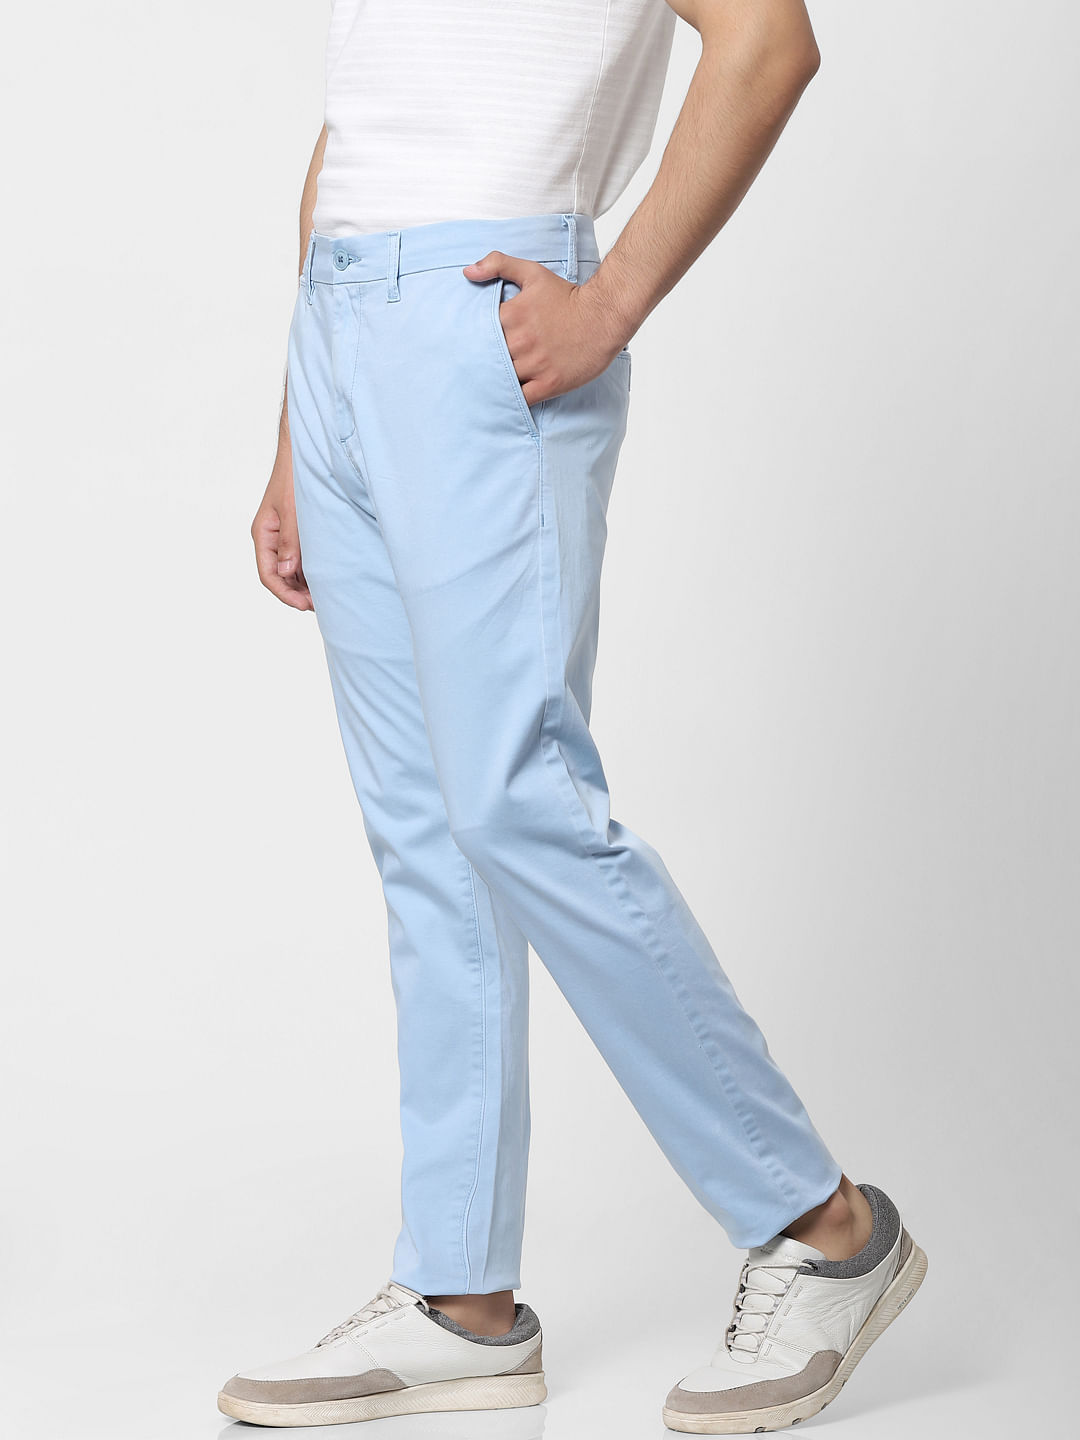 Details more than 74 blue chino pants mens super hot